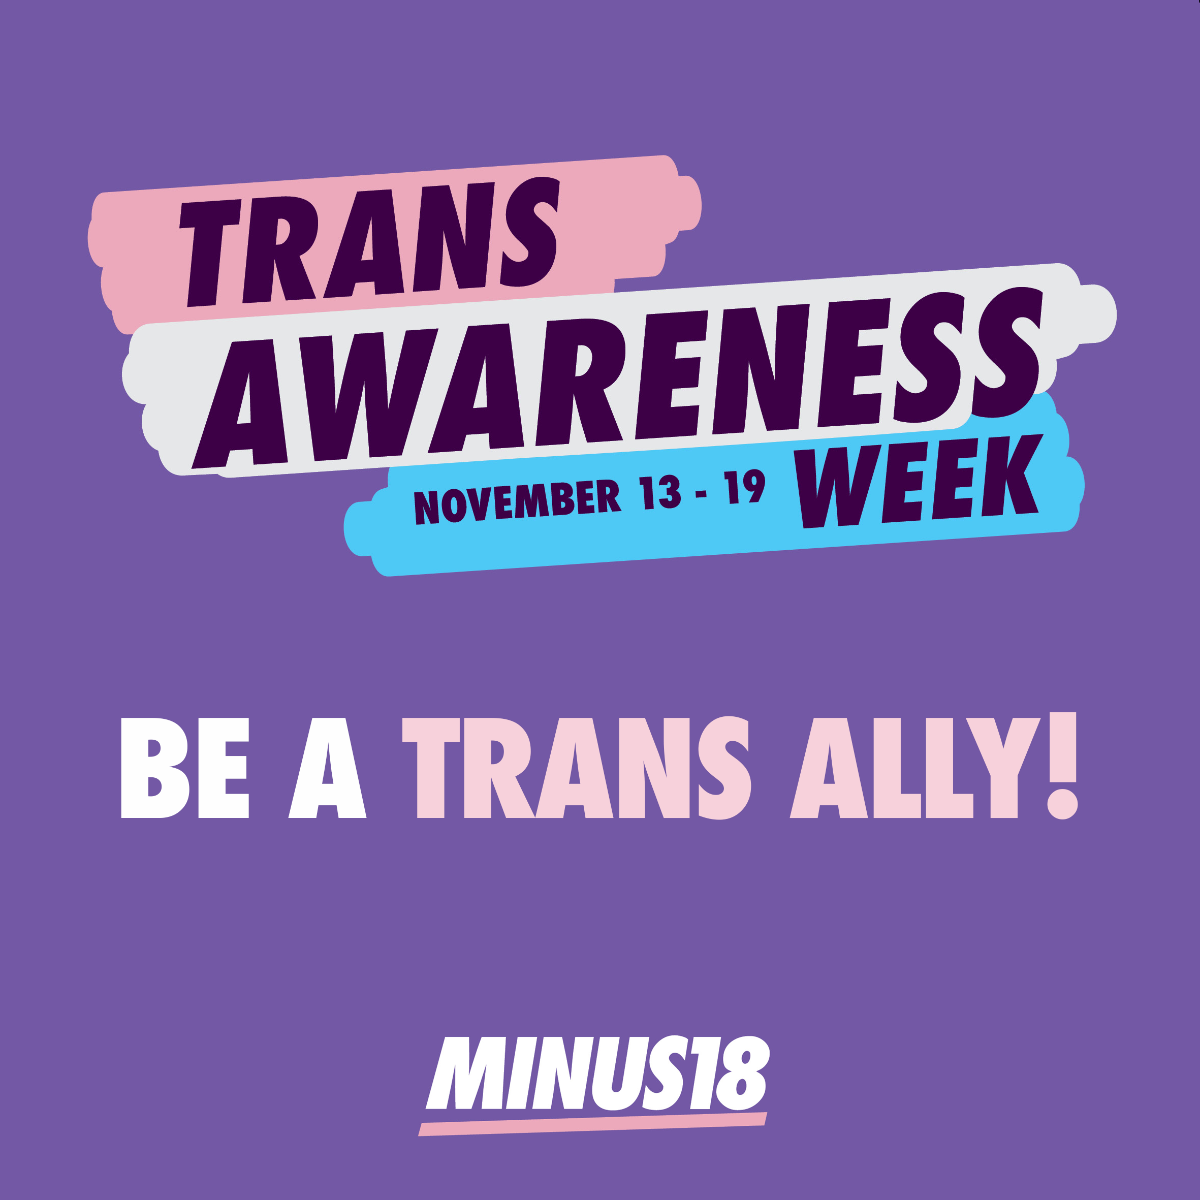 Be a trans ally